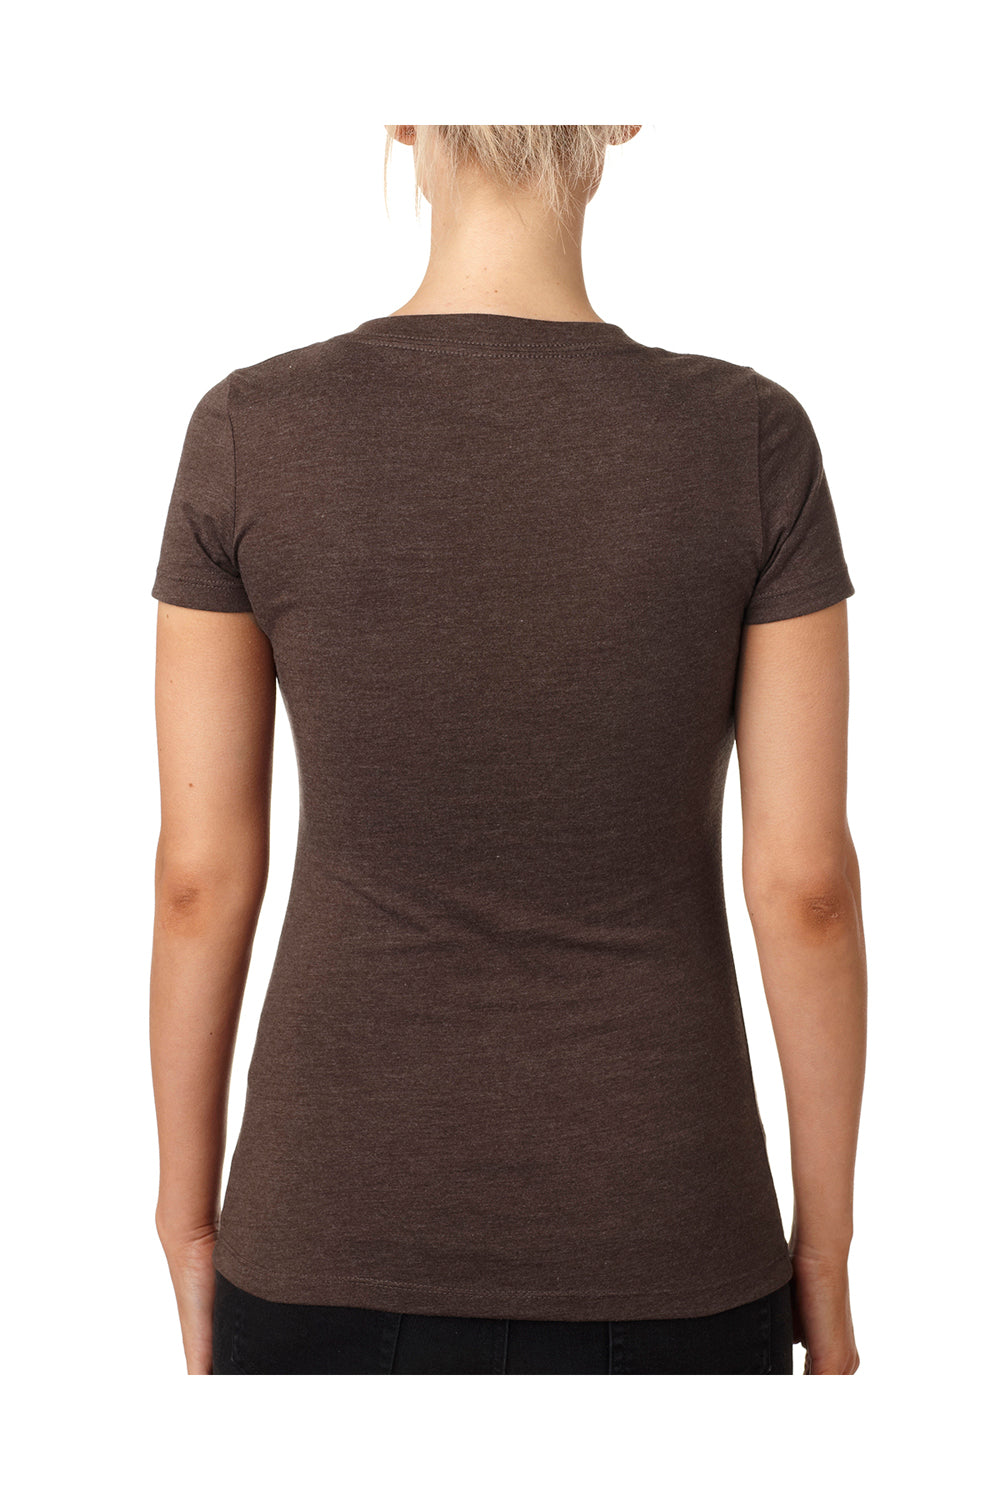 Next Level 6640 Womens CVC Jersey Short Sleeve V-Neck T-Shirt Espresso Brown Back